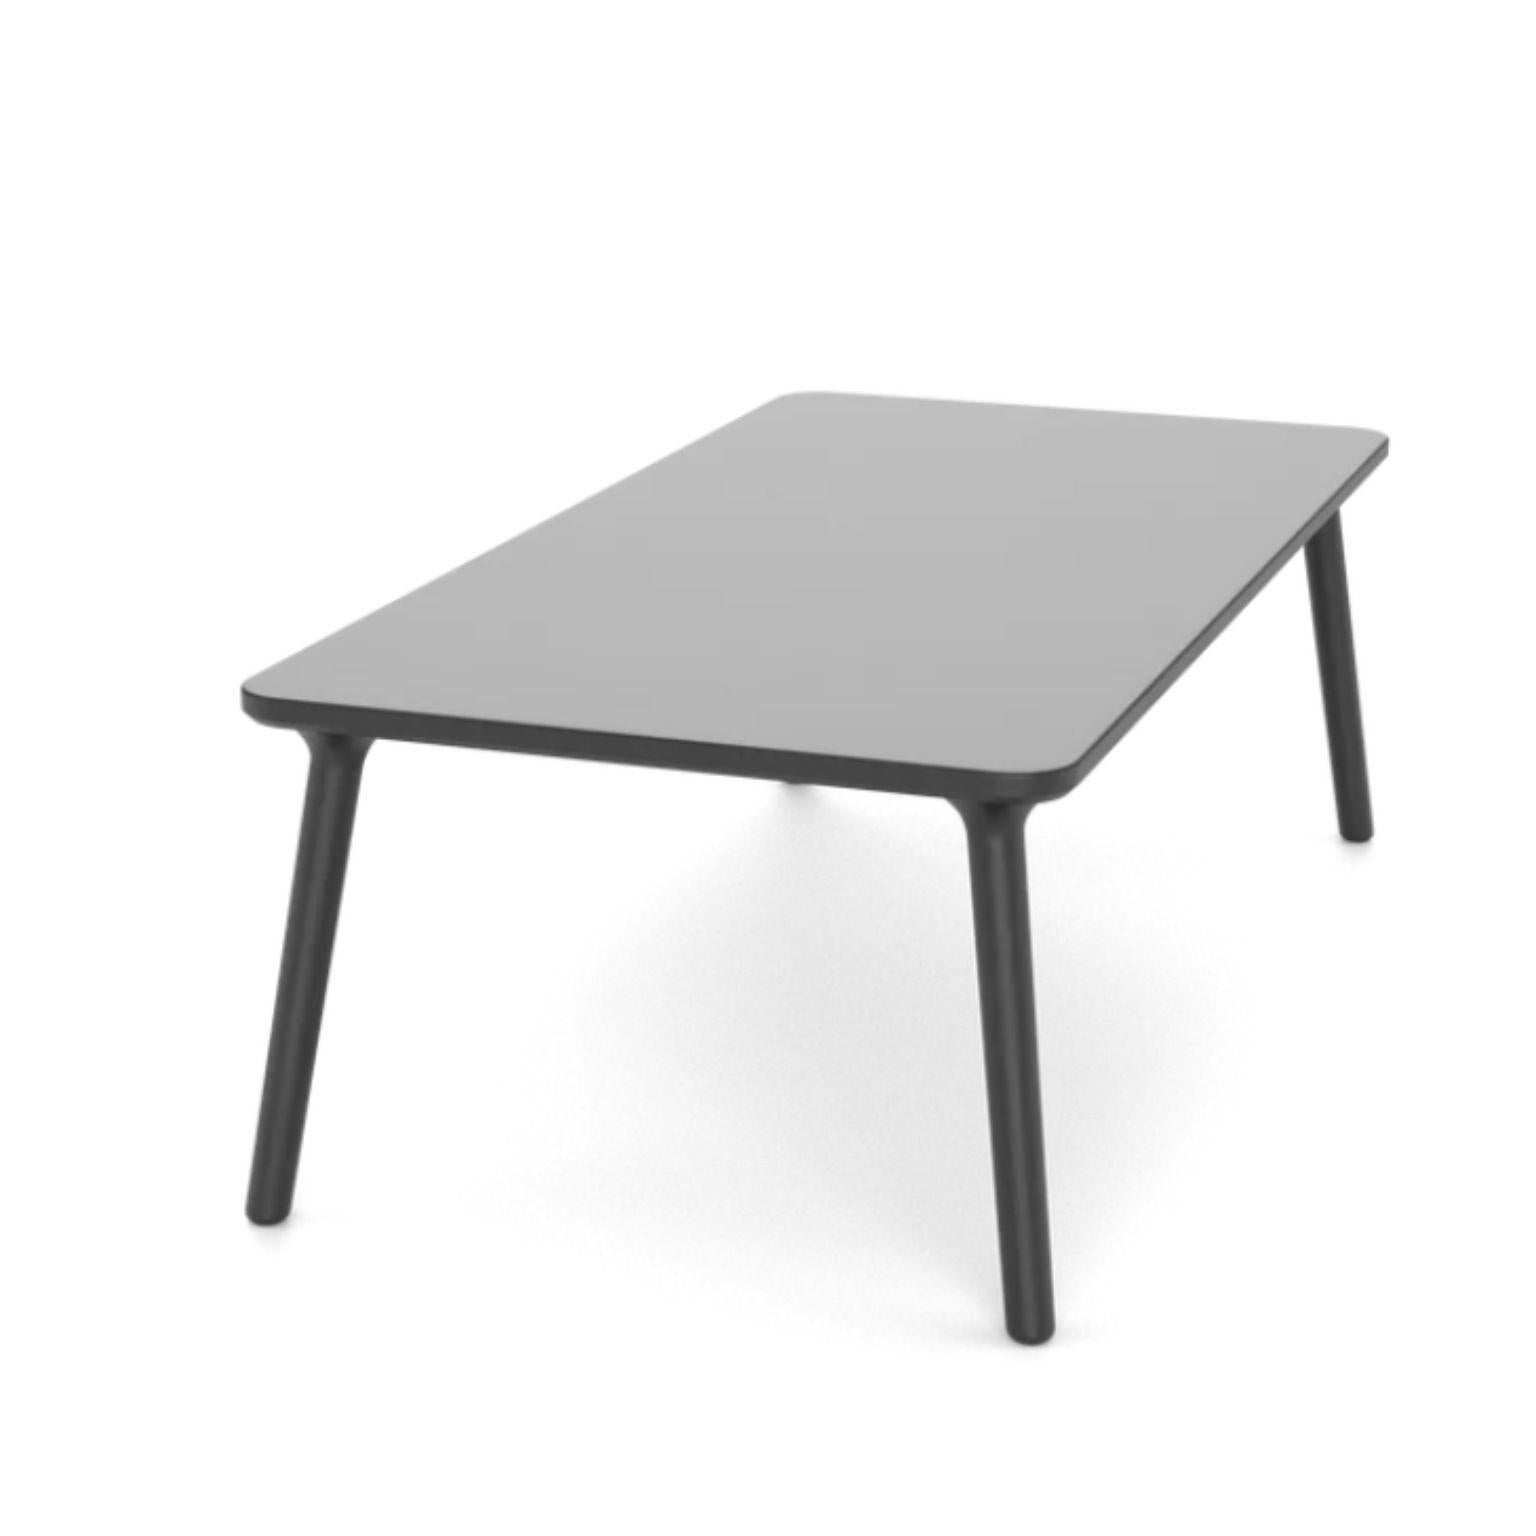 Table basse en frêne Mod 2 par Fernweh Woodworking
Dimensions : 
L 24